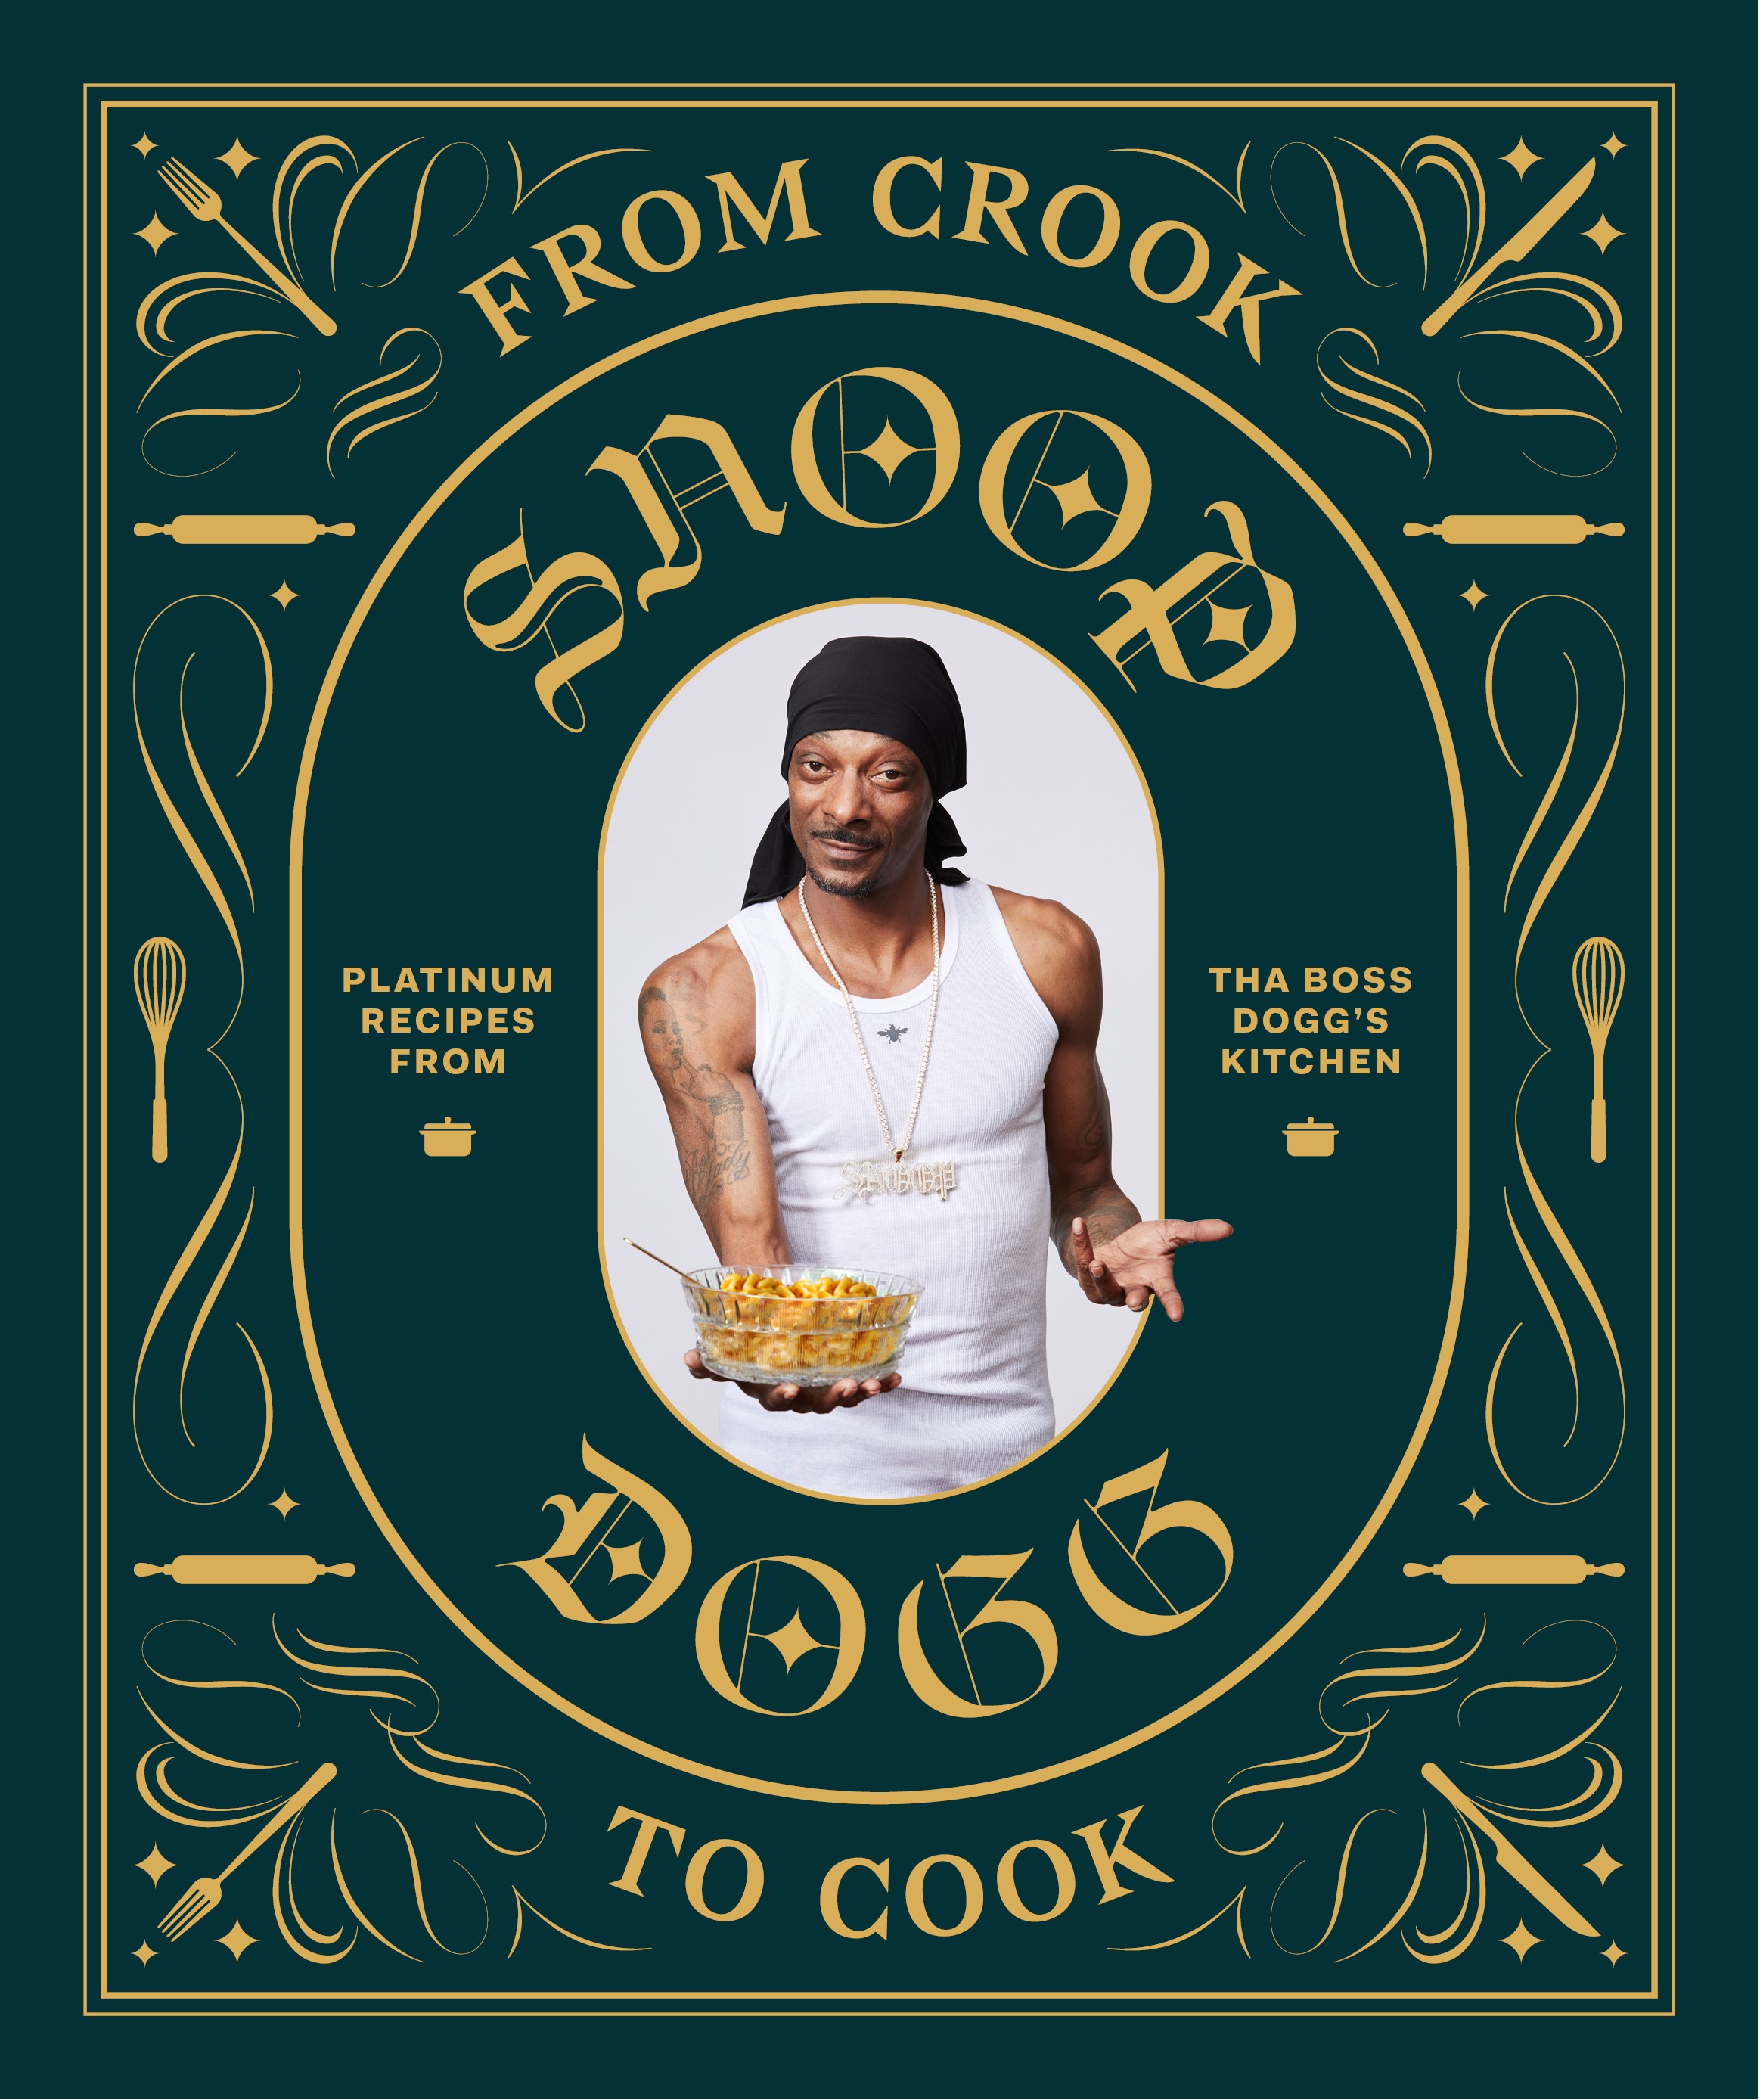 Snoop Dogg's recipe book